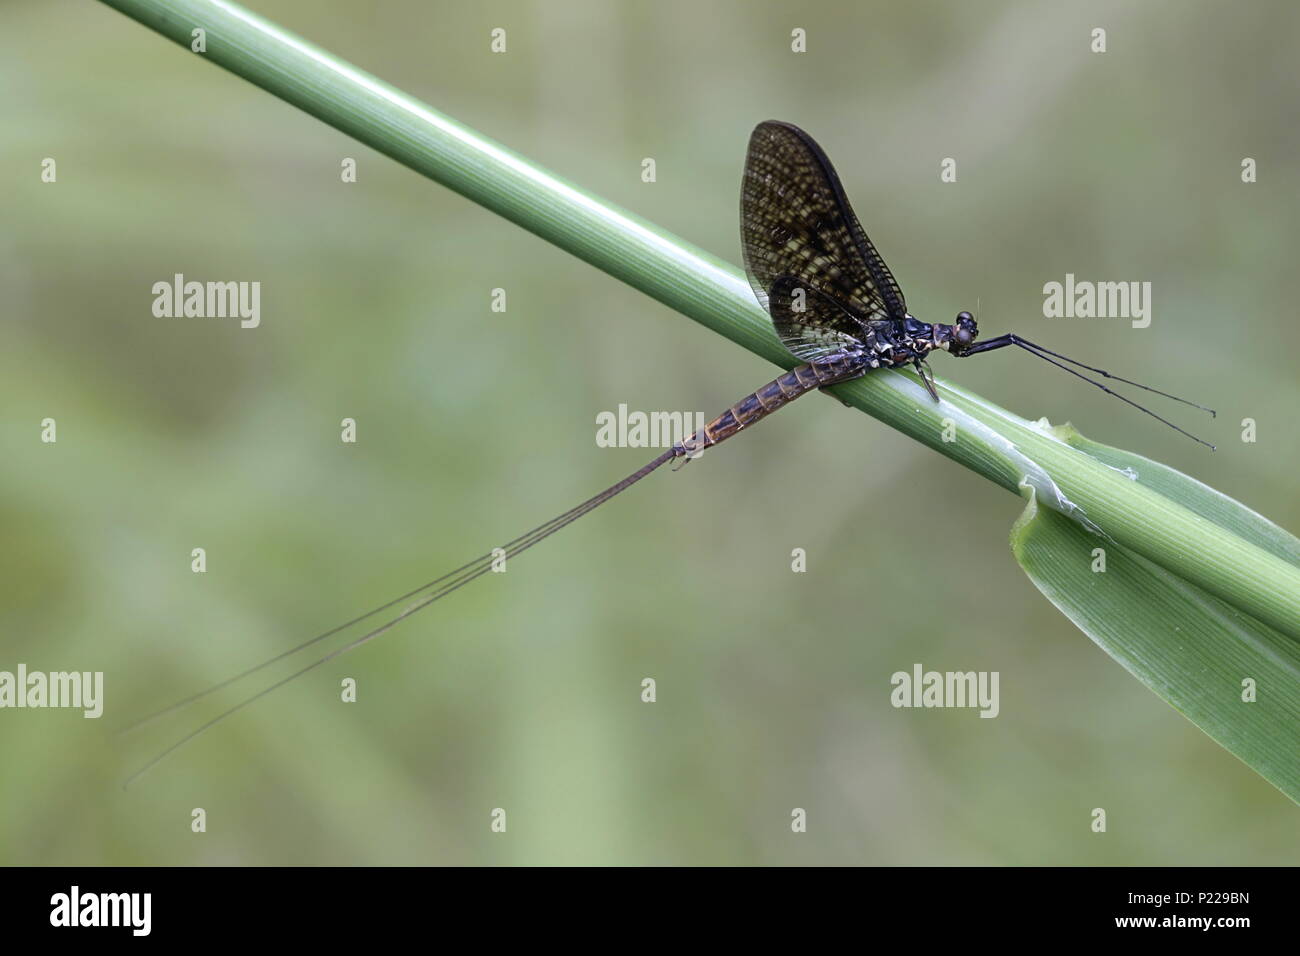 Common mayfly, also called shadly and fishfly, Ephemera vulgata Stock Photo